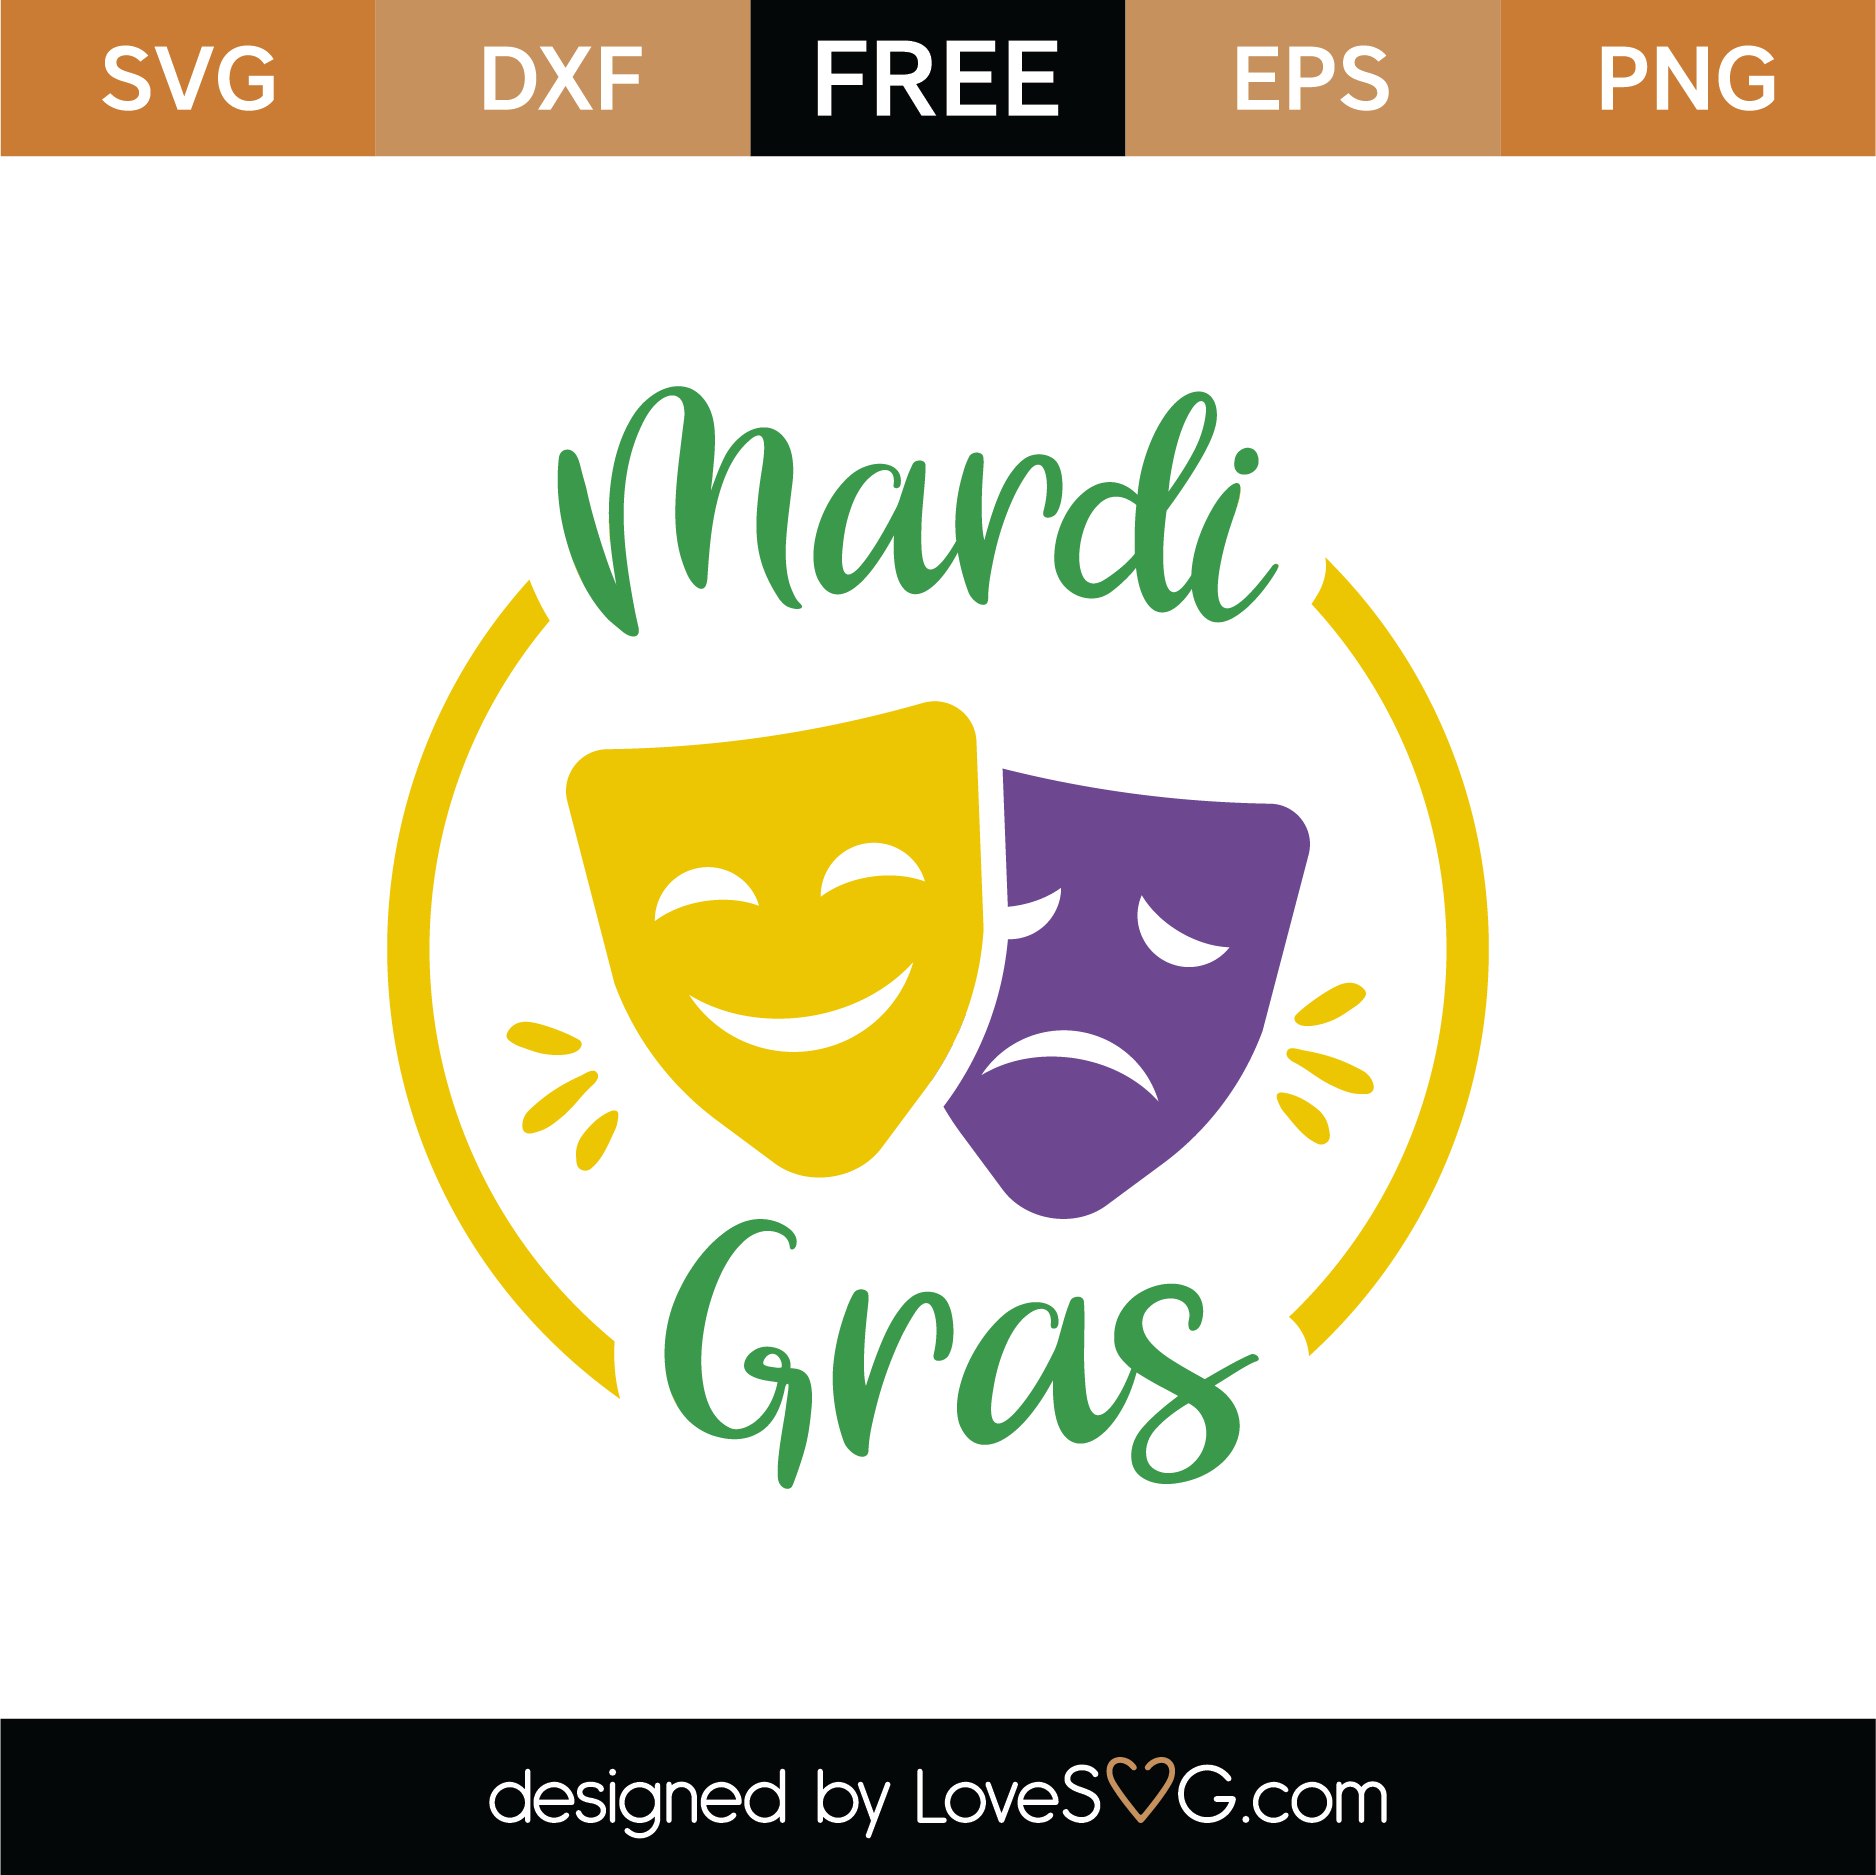 Download Free Mardi Gras SVG Cut File | Lovesvg.com